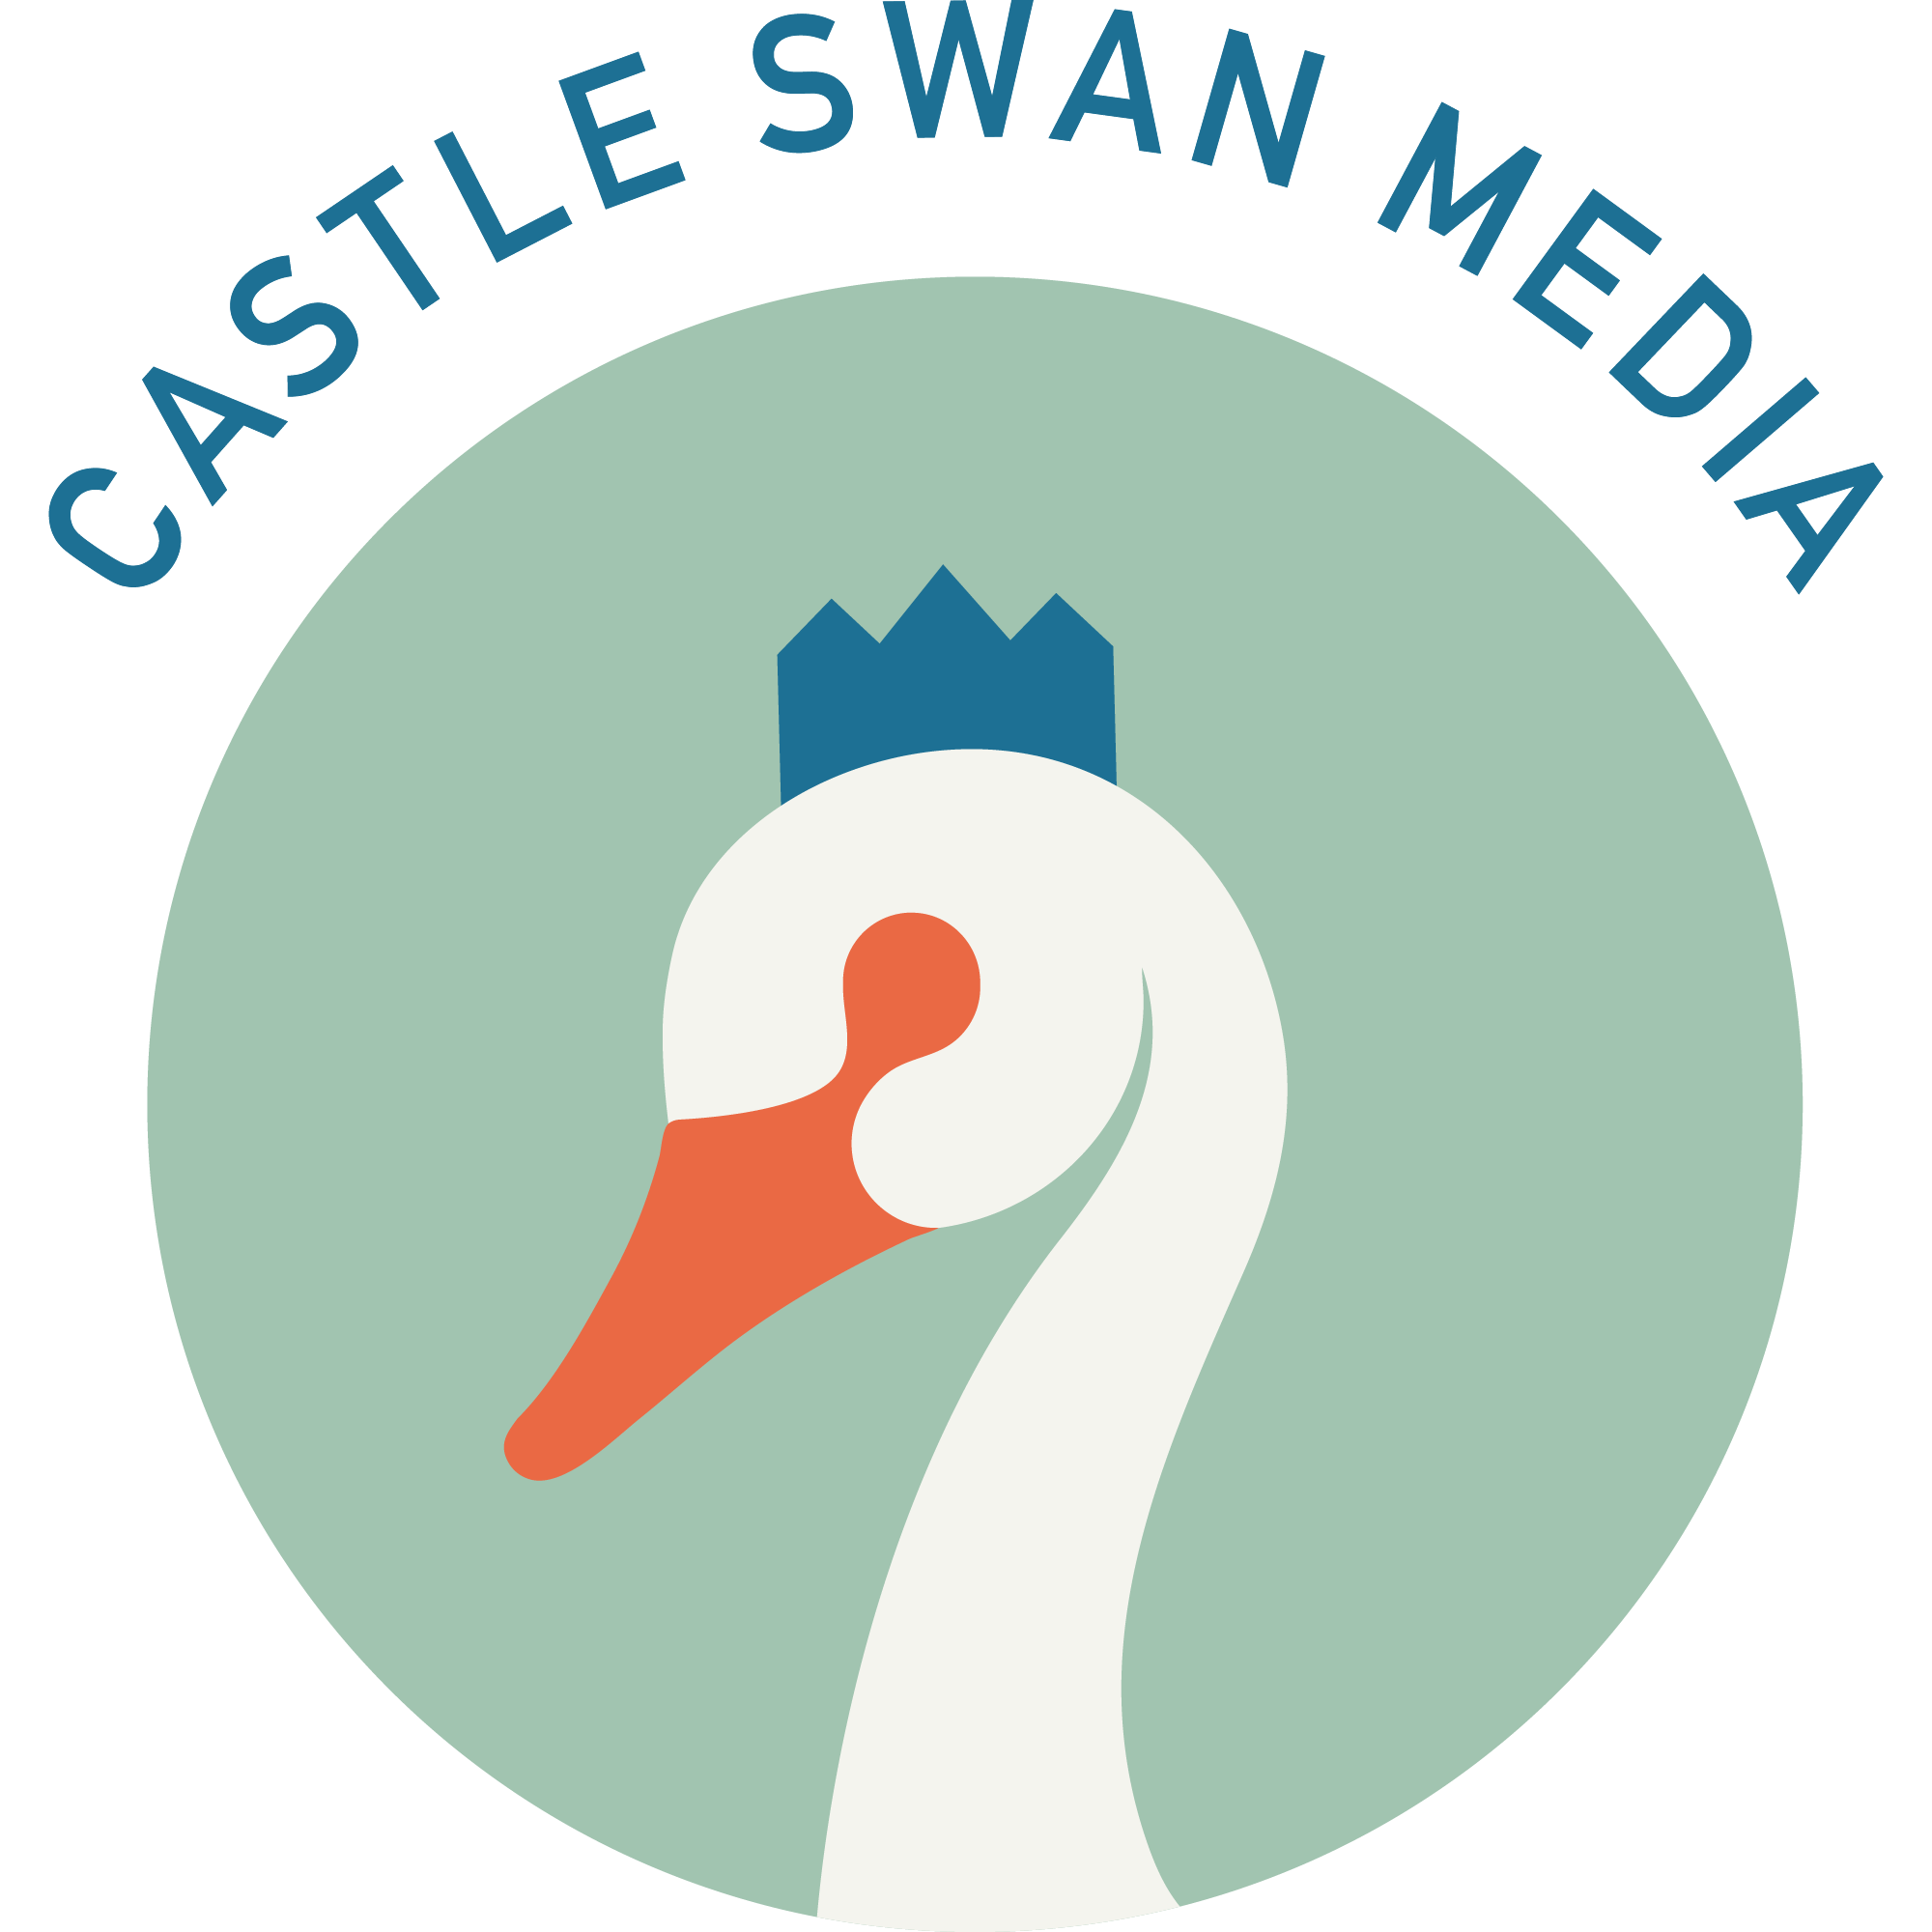 Castle Swan Media Logo